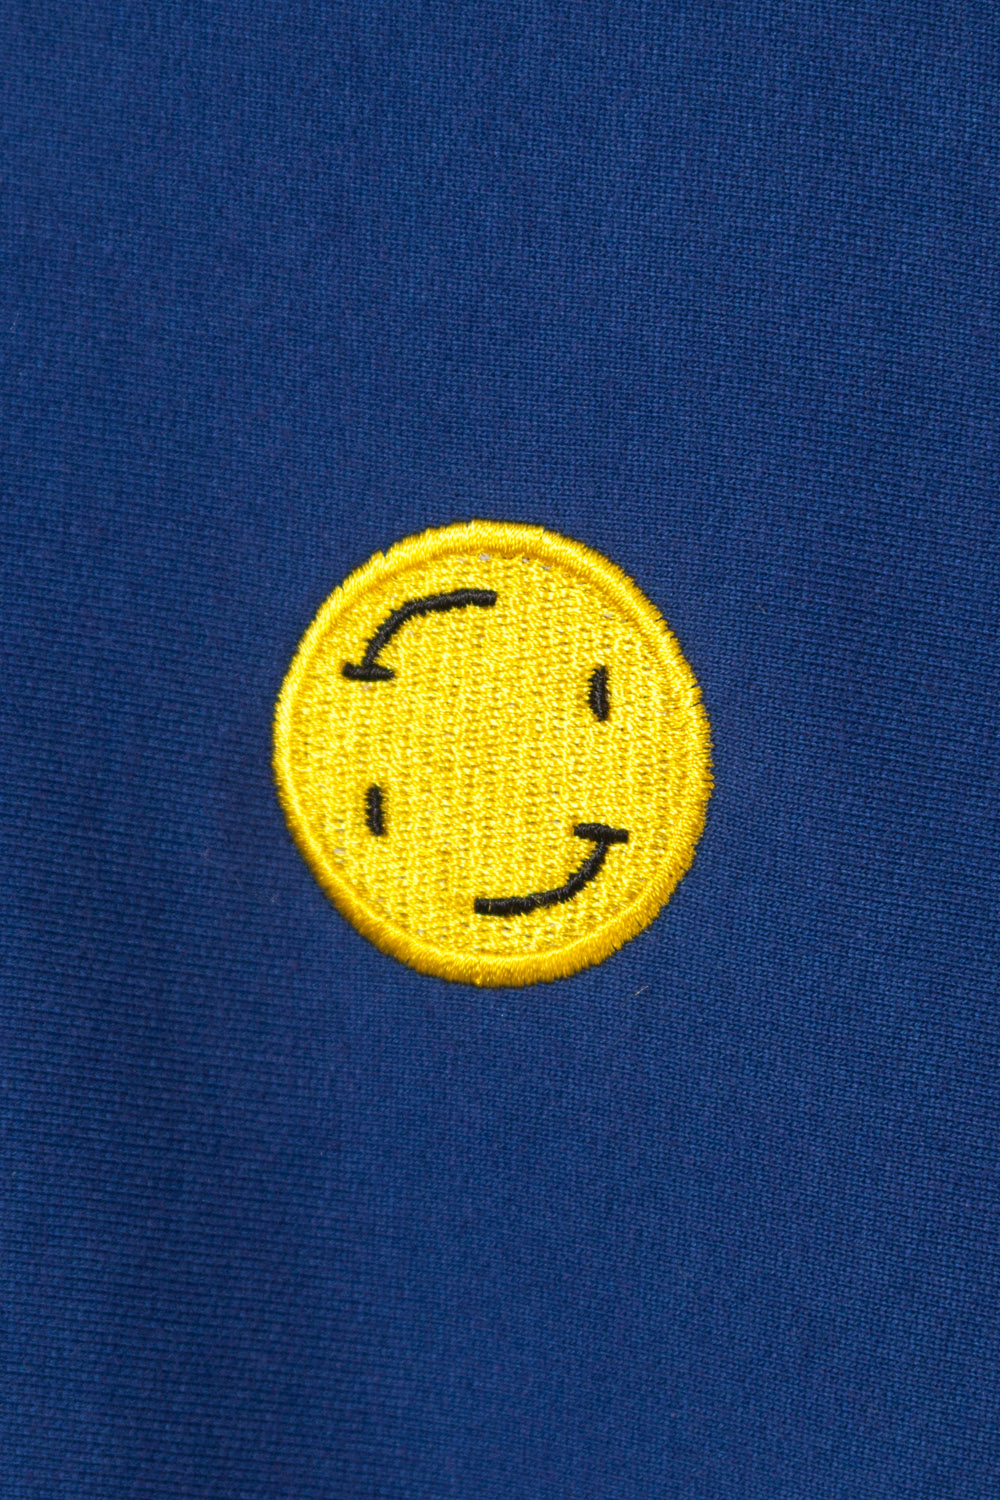 Test Pressing, Good Measure, collaboration. sweatshirts, fragola, danish blue, deconstructed smiley, manchester, sweatshirt, heritage, smiley